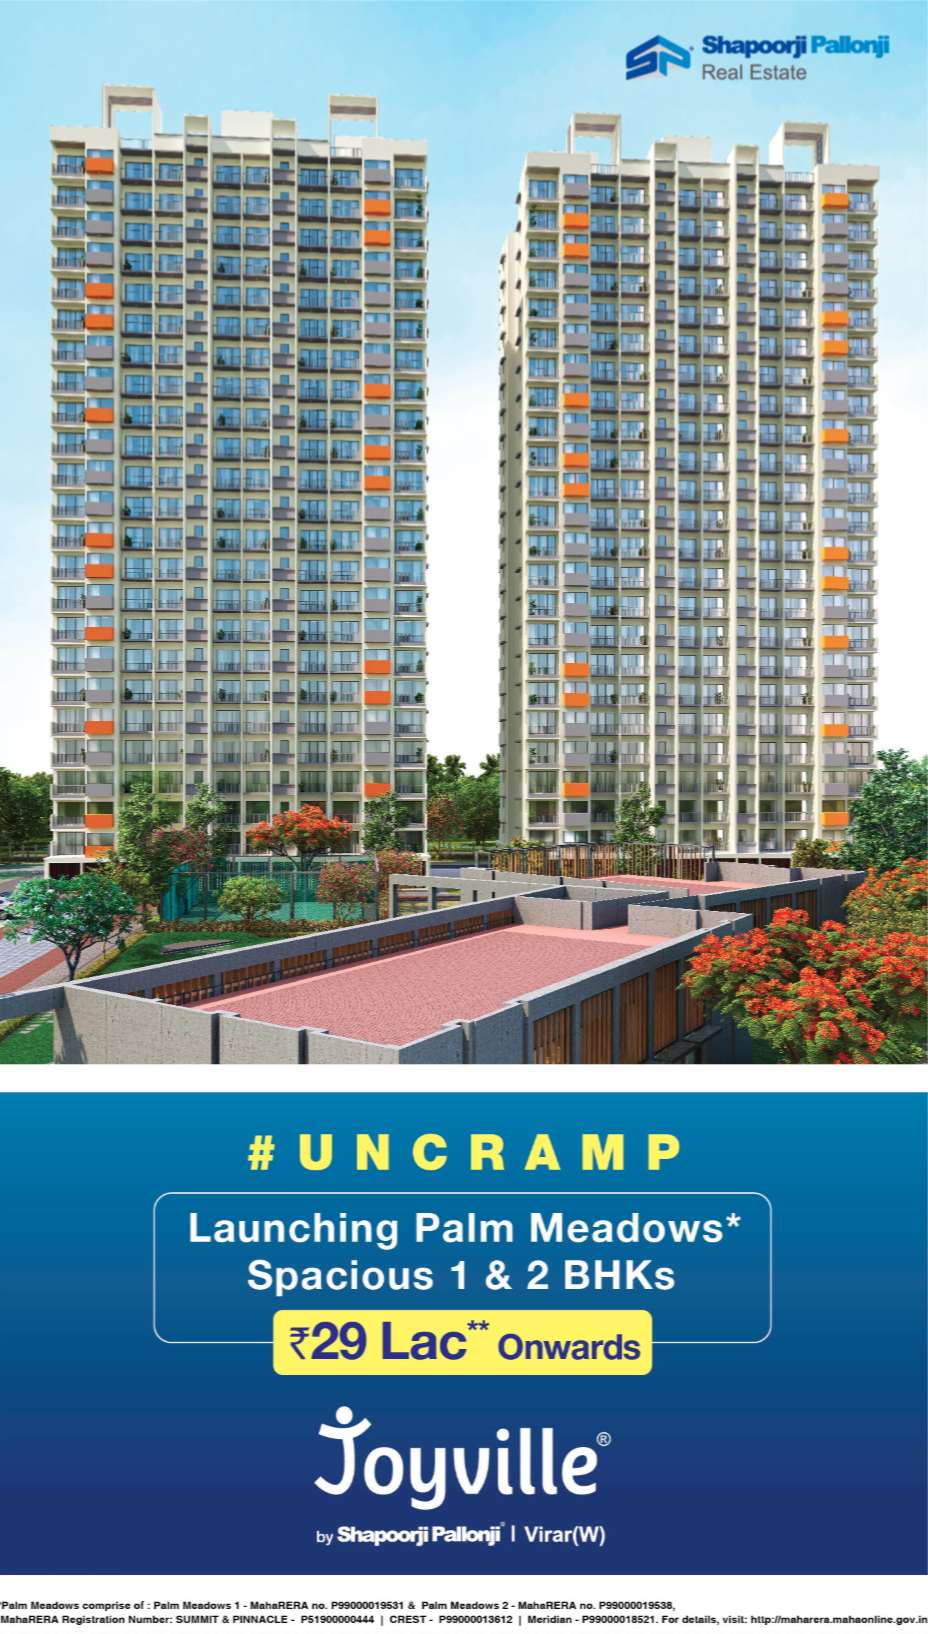 Launching Palm Meadows at Shapoorji Pallonji Joyville in Virar, Mumbai Update